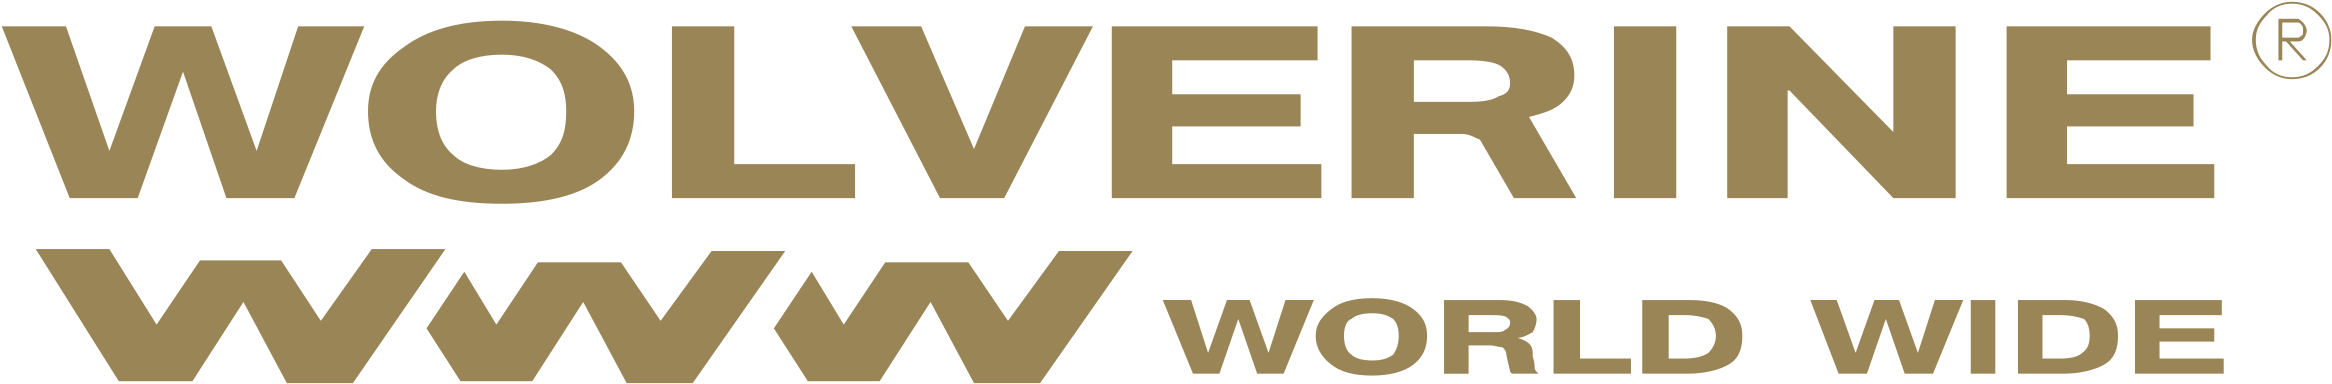 Wolverine World Wide Logo PNG image